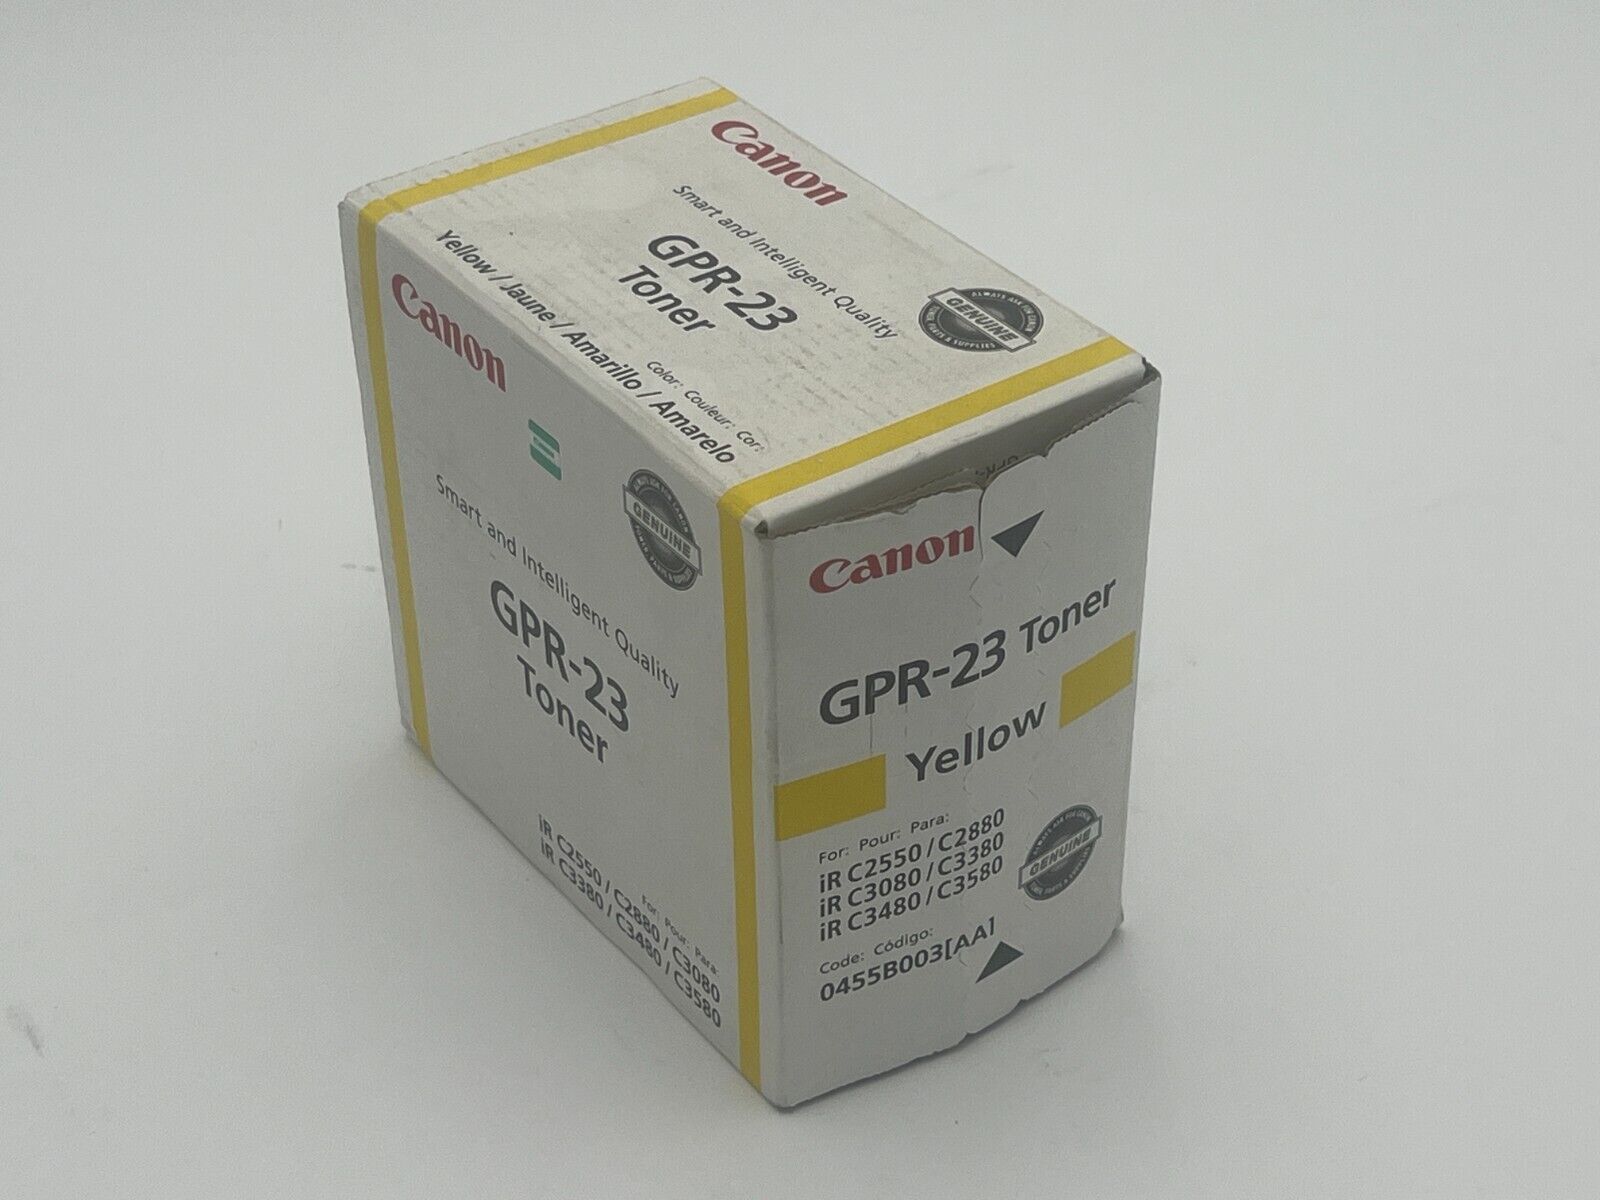 Genuine Canon 0455B003[AA] / GPR-23 Yellow Toner Cartridge for iR-C2550 / 2880